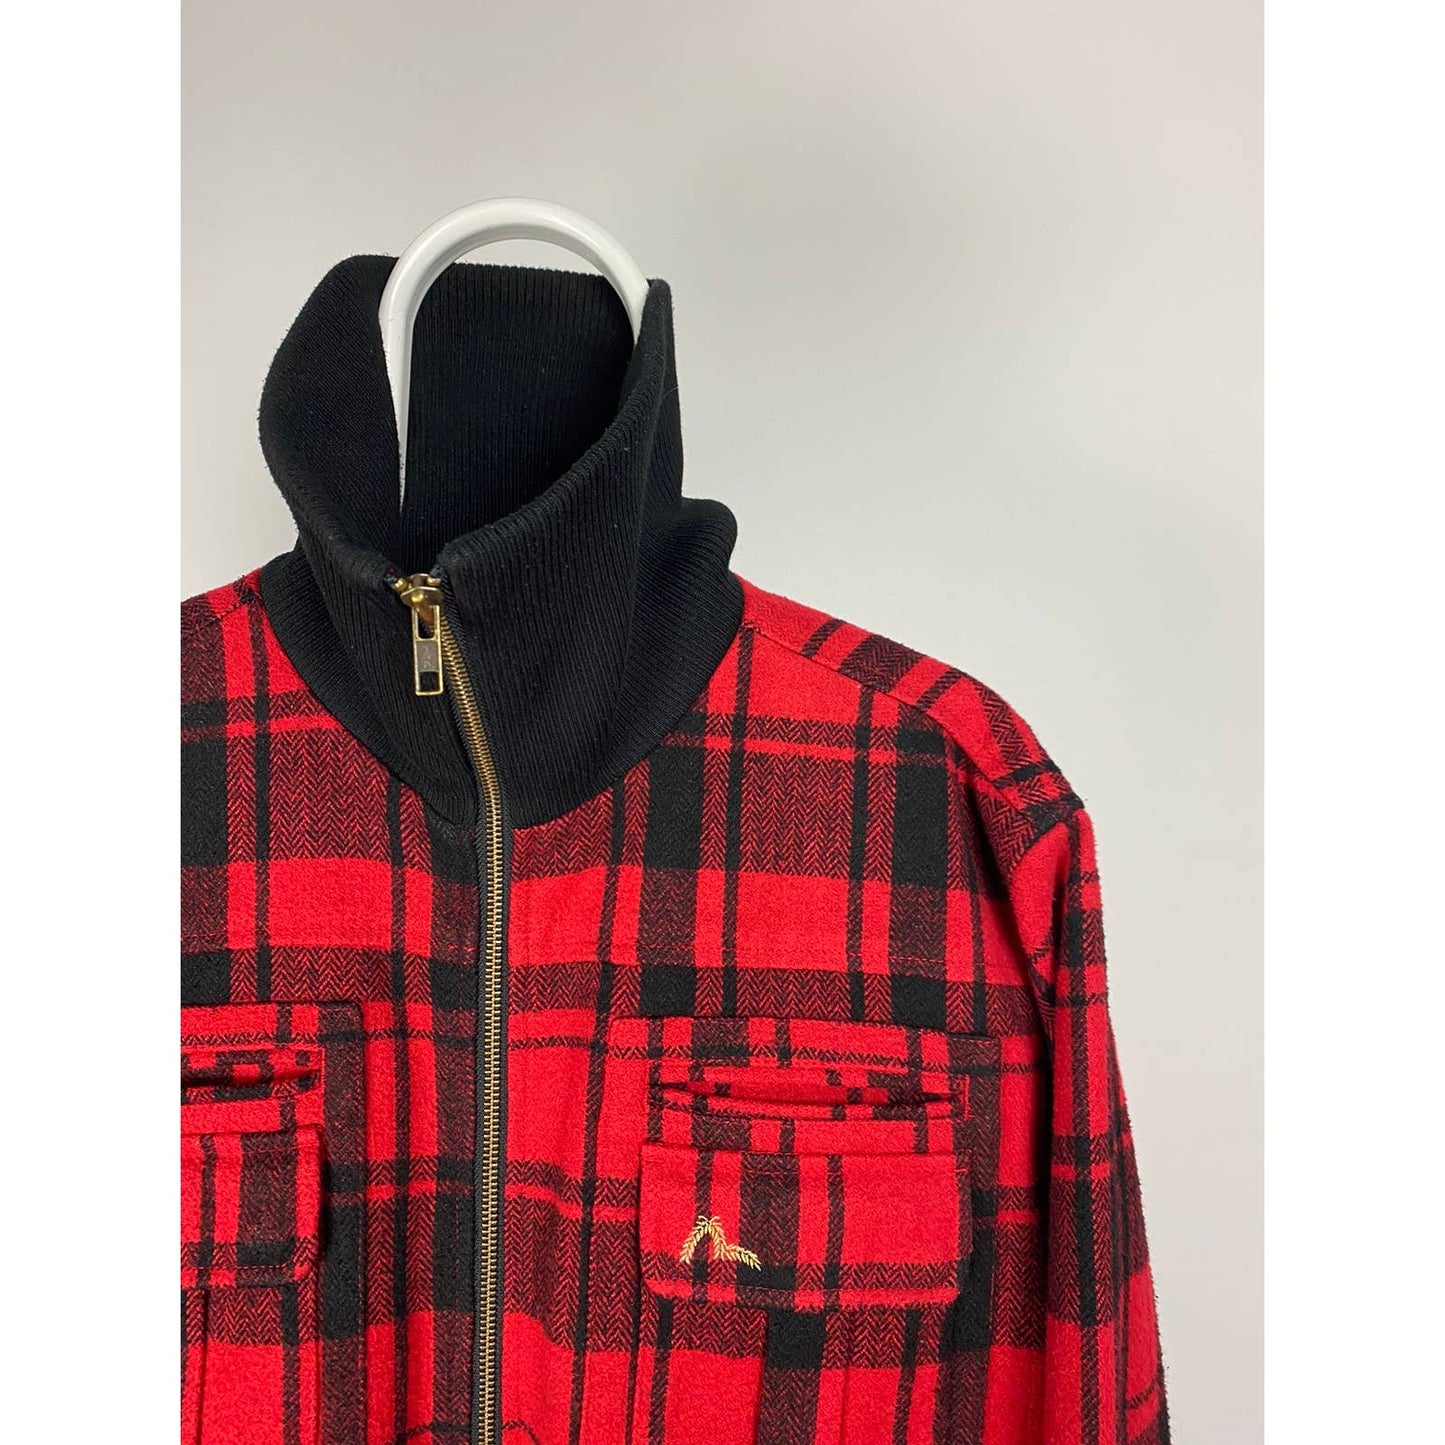 Evisu Japan vintage zip up woolen hooded jacket black red